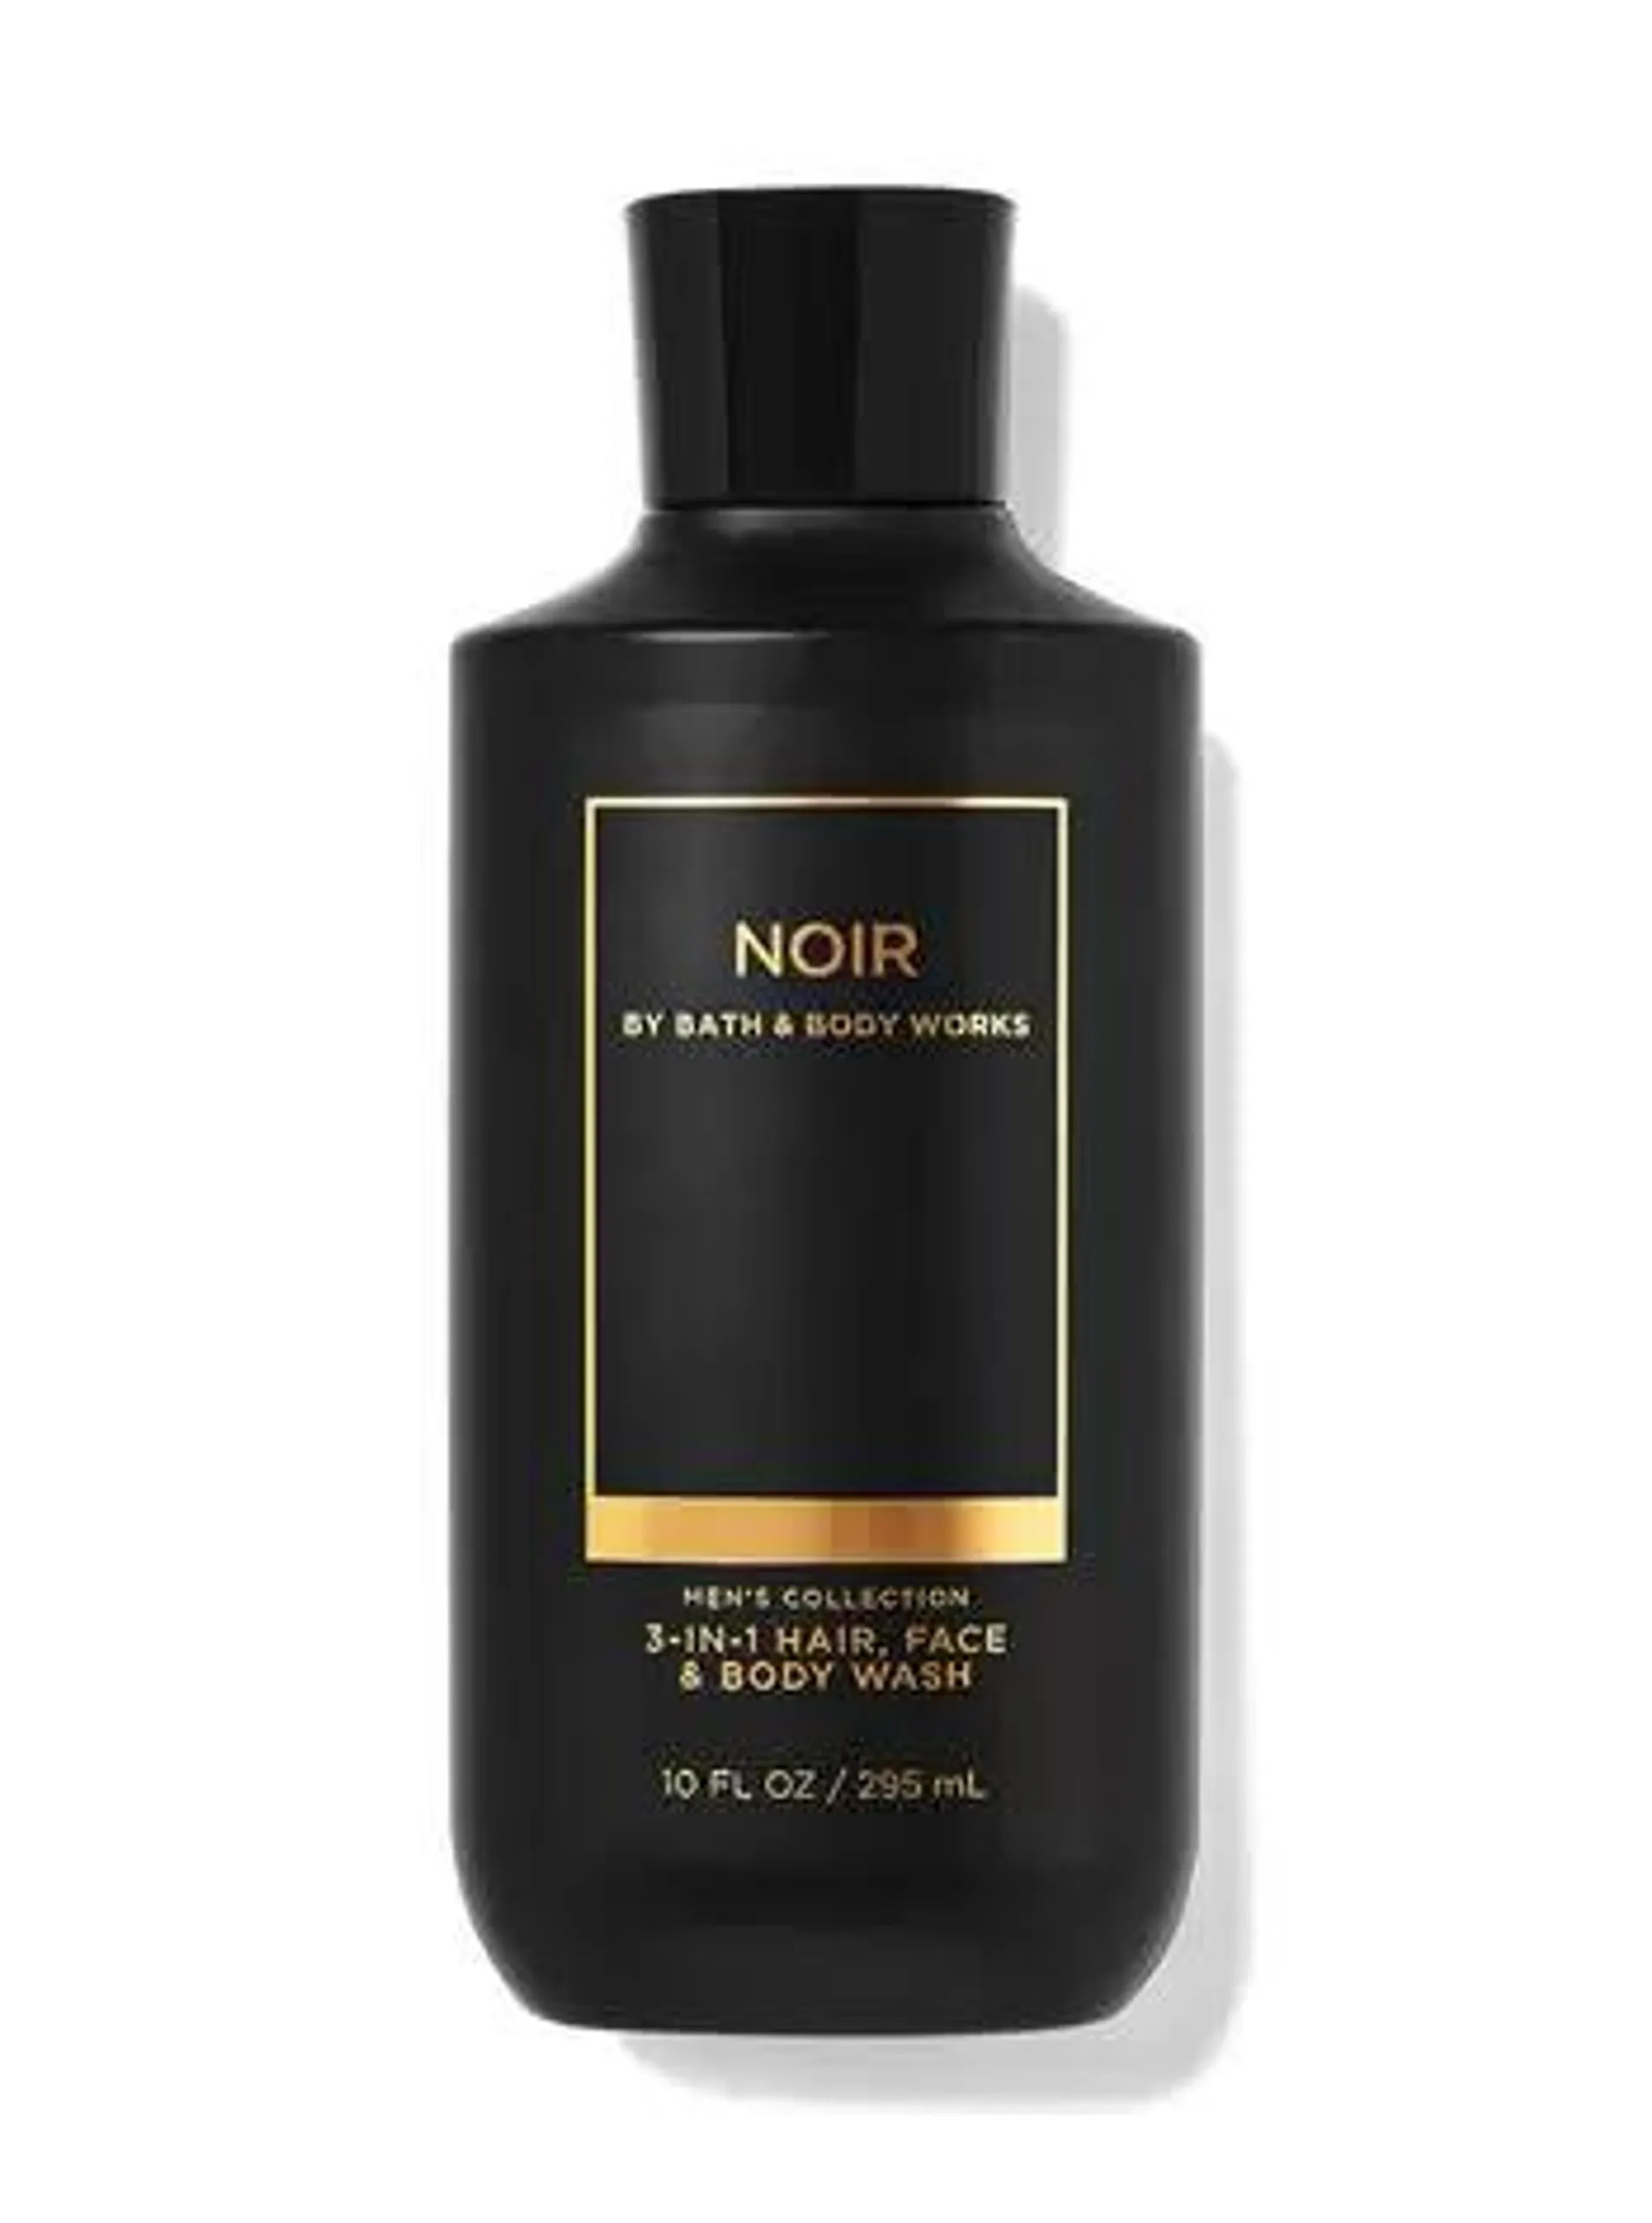 Noir 3-in-1 Hair, Face & Body Wash